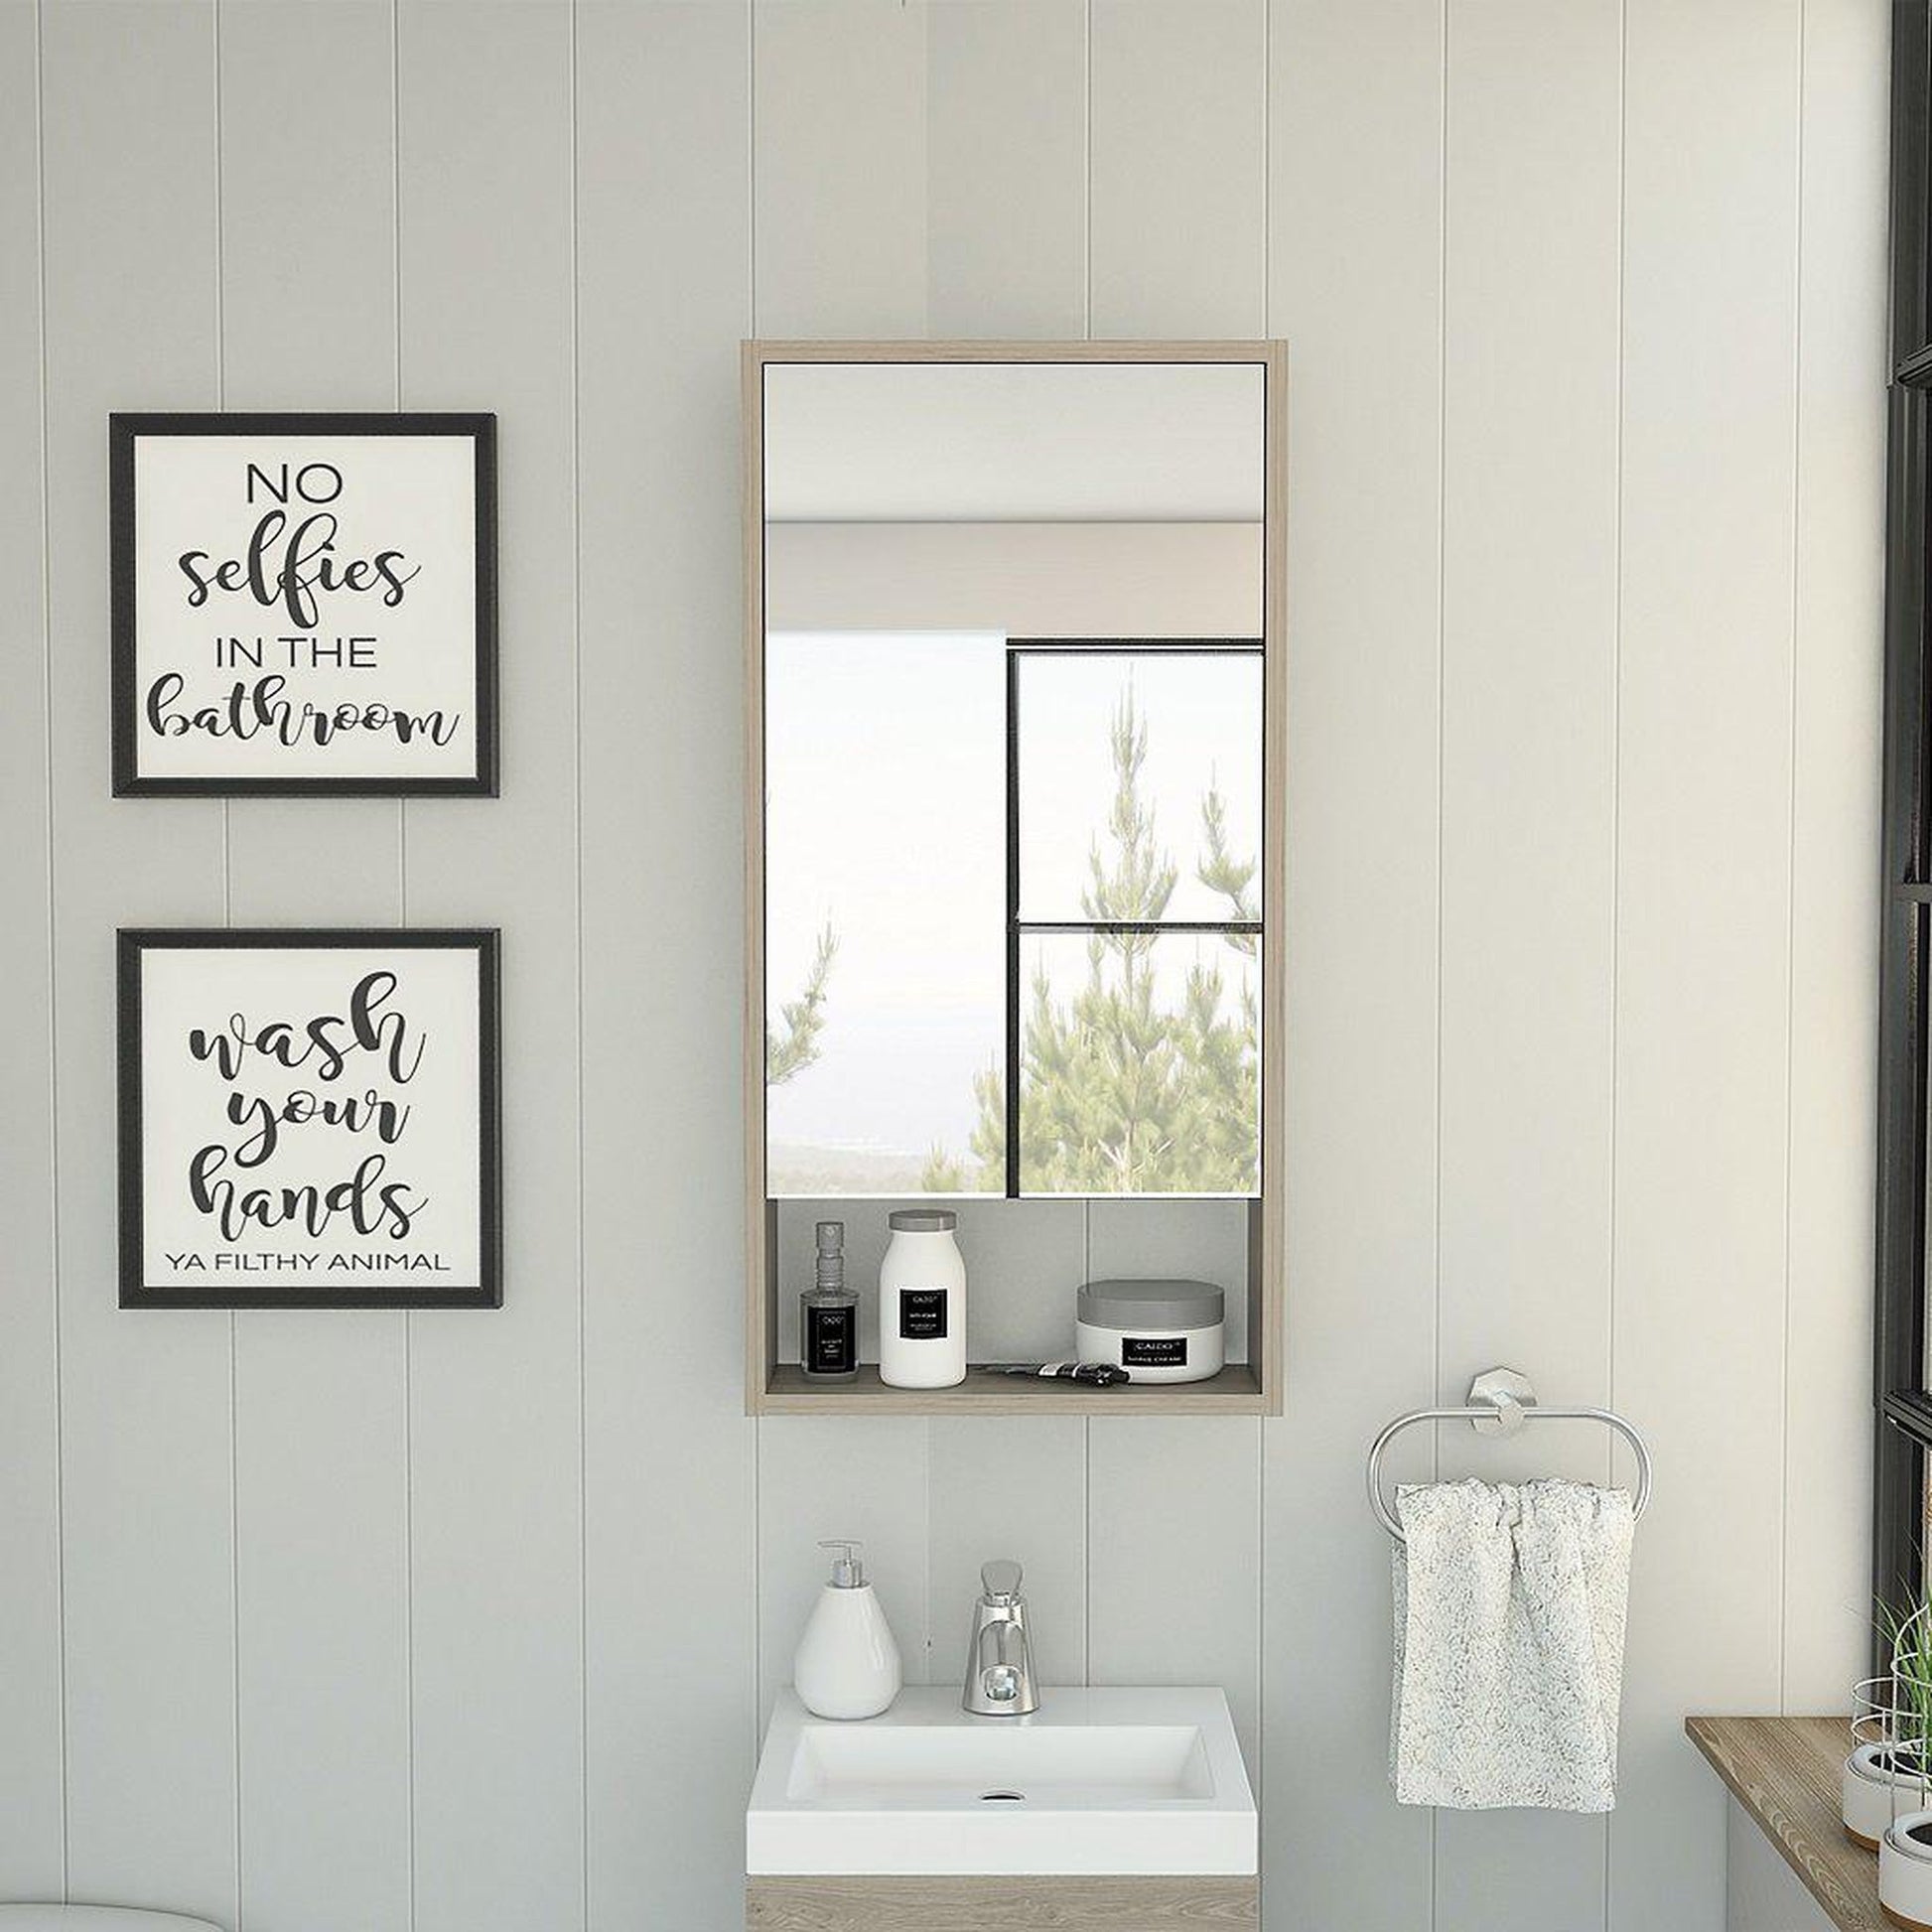 36 inch Wide Wall Mount Mirrored Bathroom Medicine Cabinet Triple Mirror Door, White